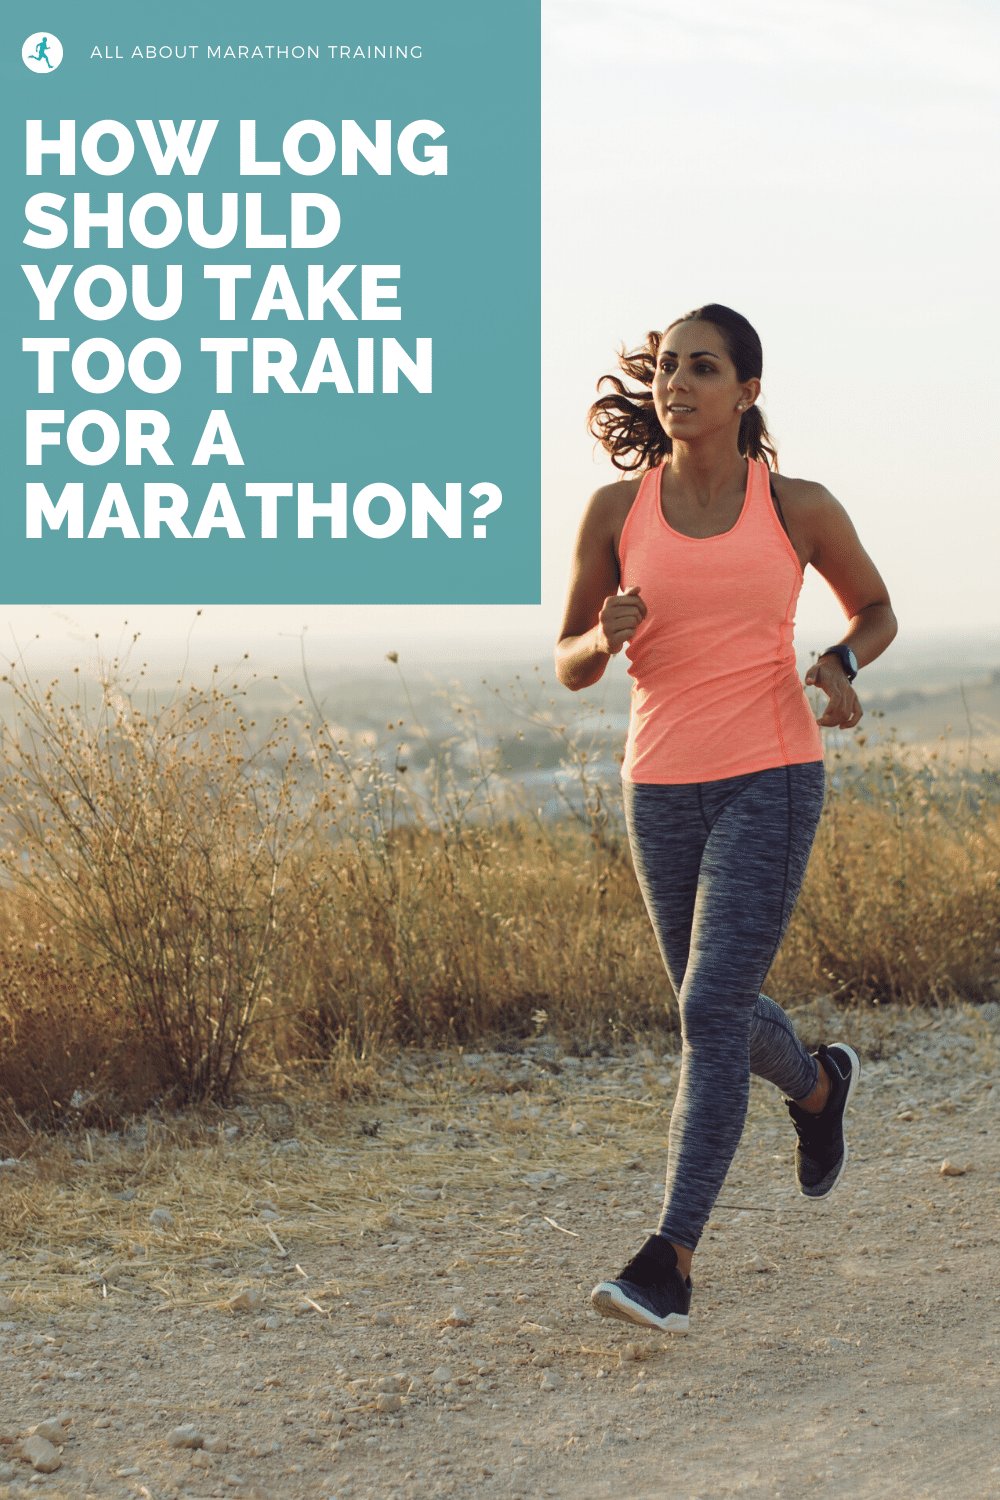 How long should you train for a marathon